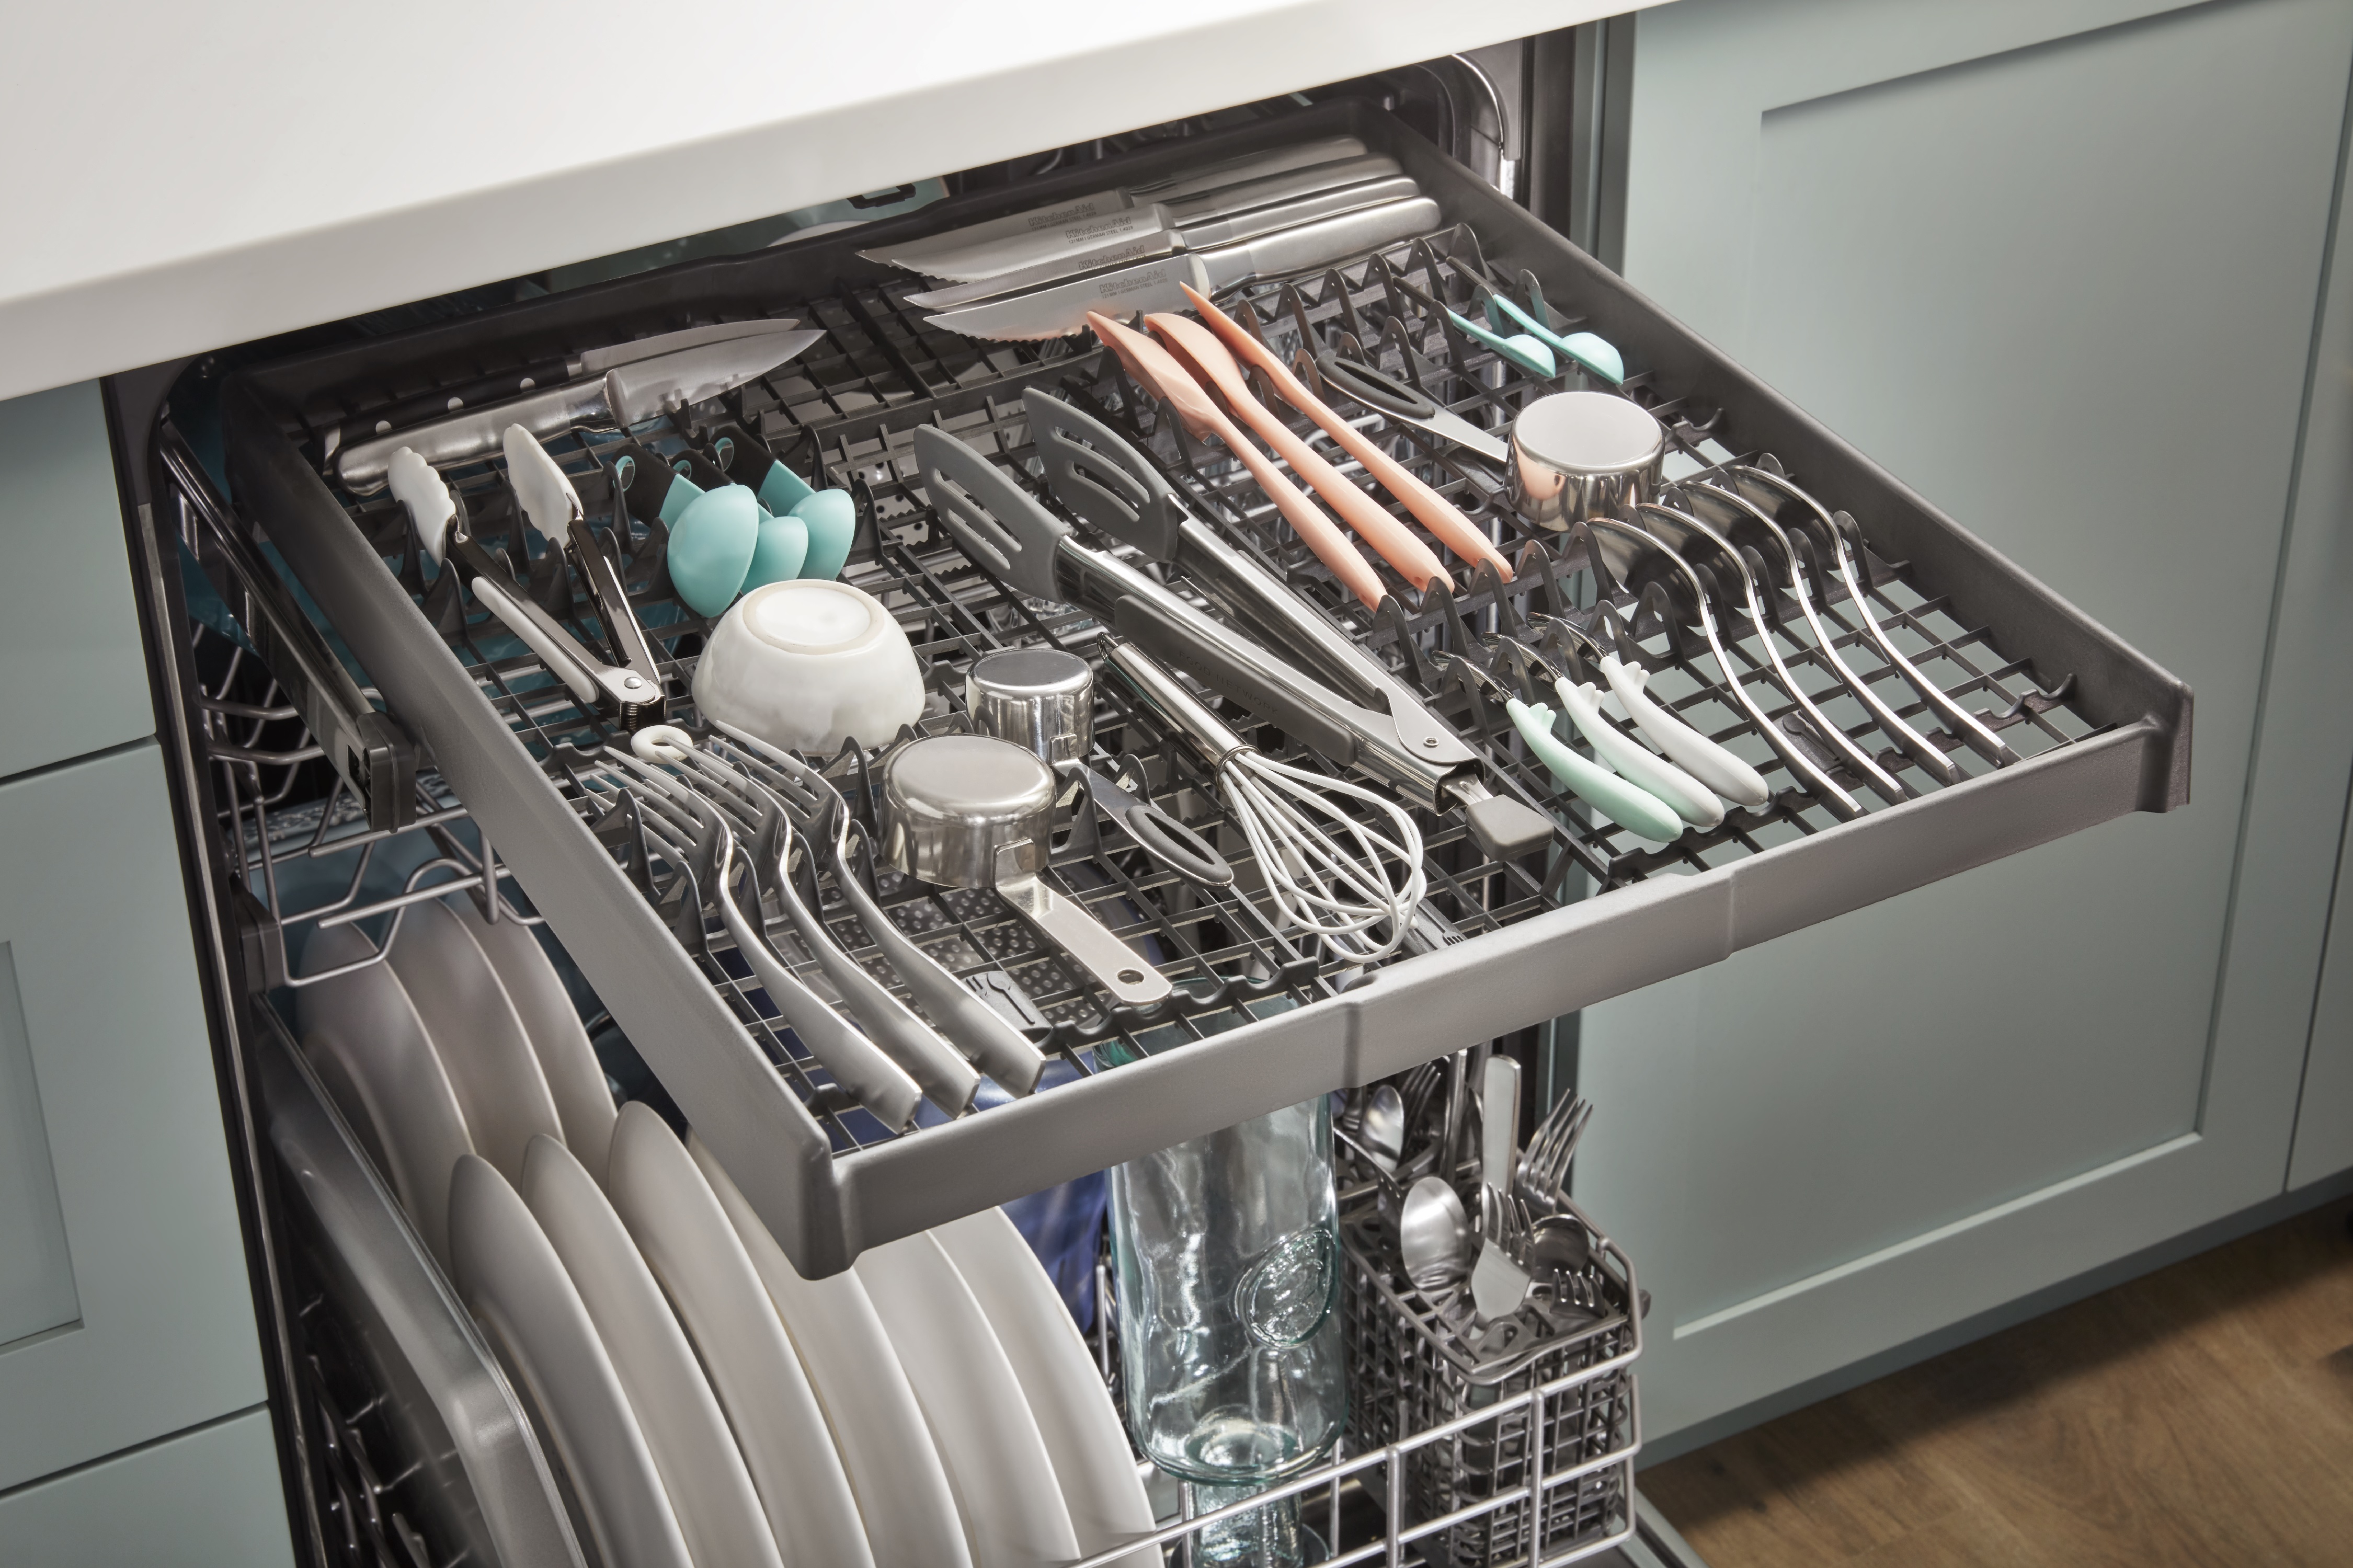 Whirlpool dishwasher reveals adjustable third rack with utensils